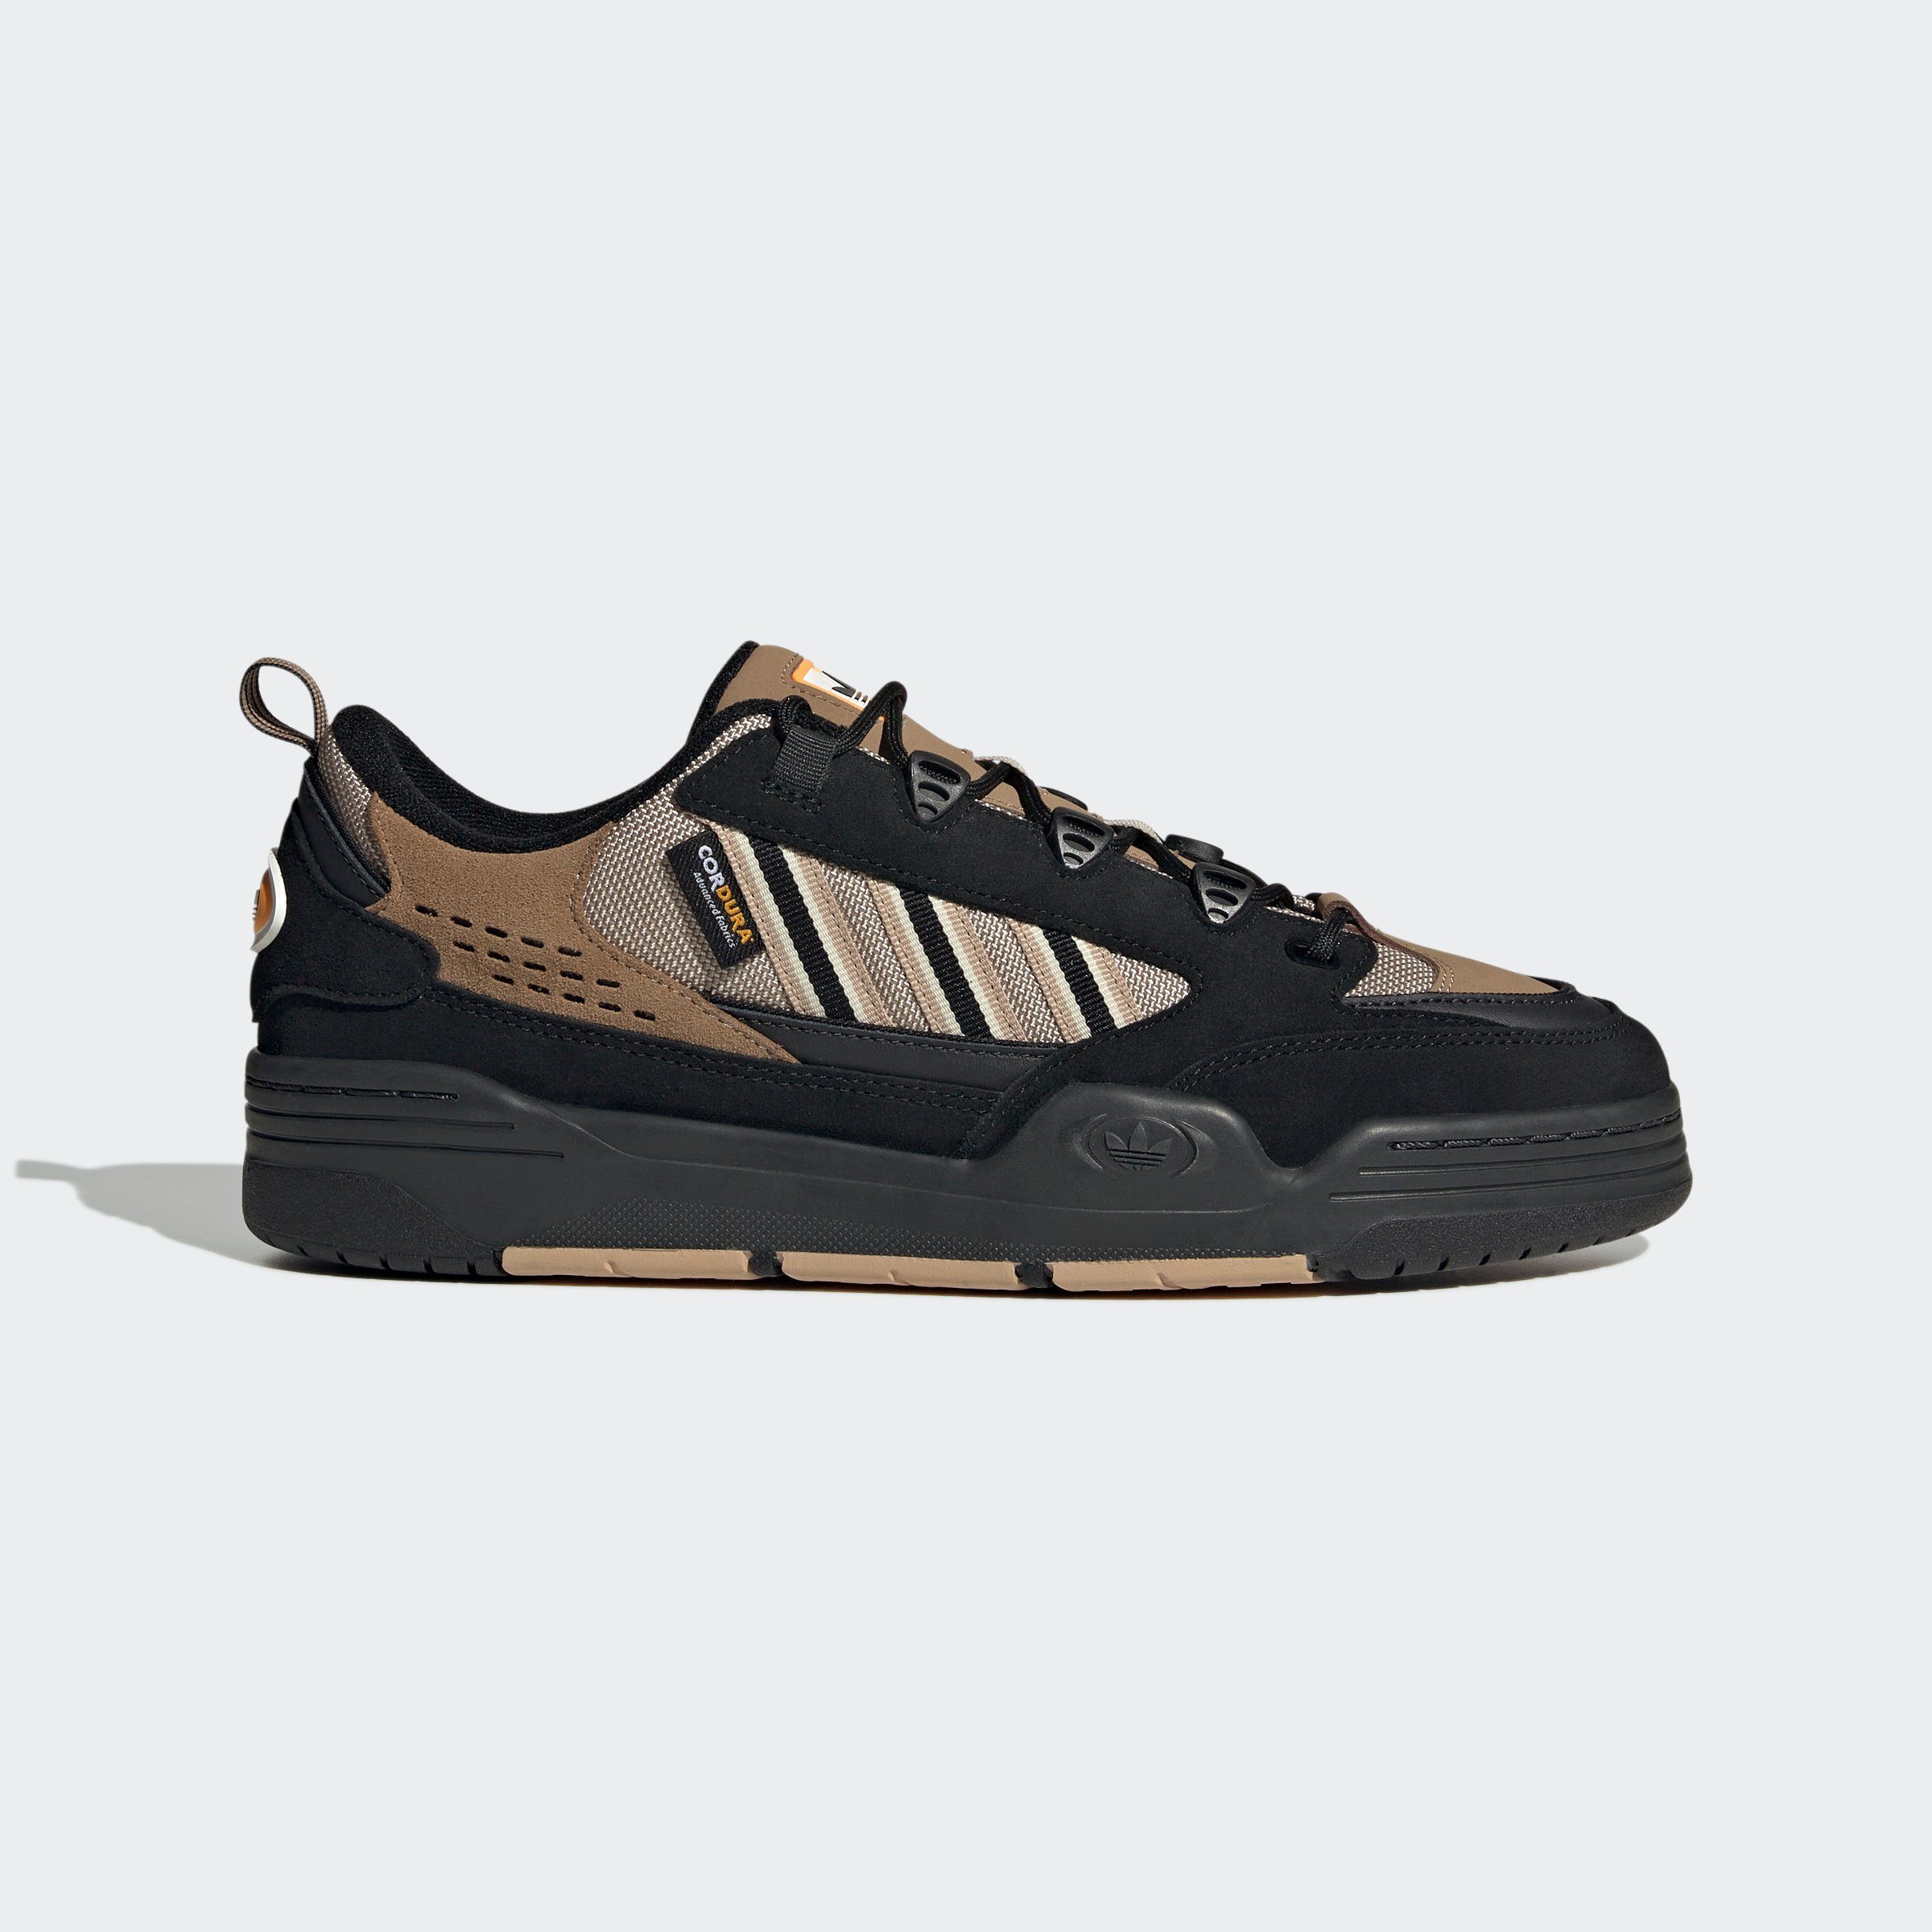 Core Wonder / Black adidas Originals ADI2000 / Beige Cardboard Sneaker